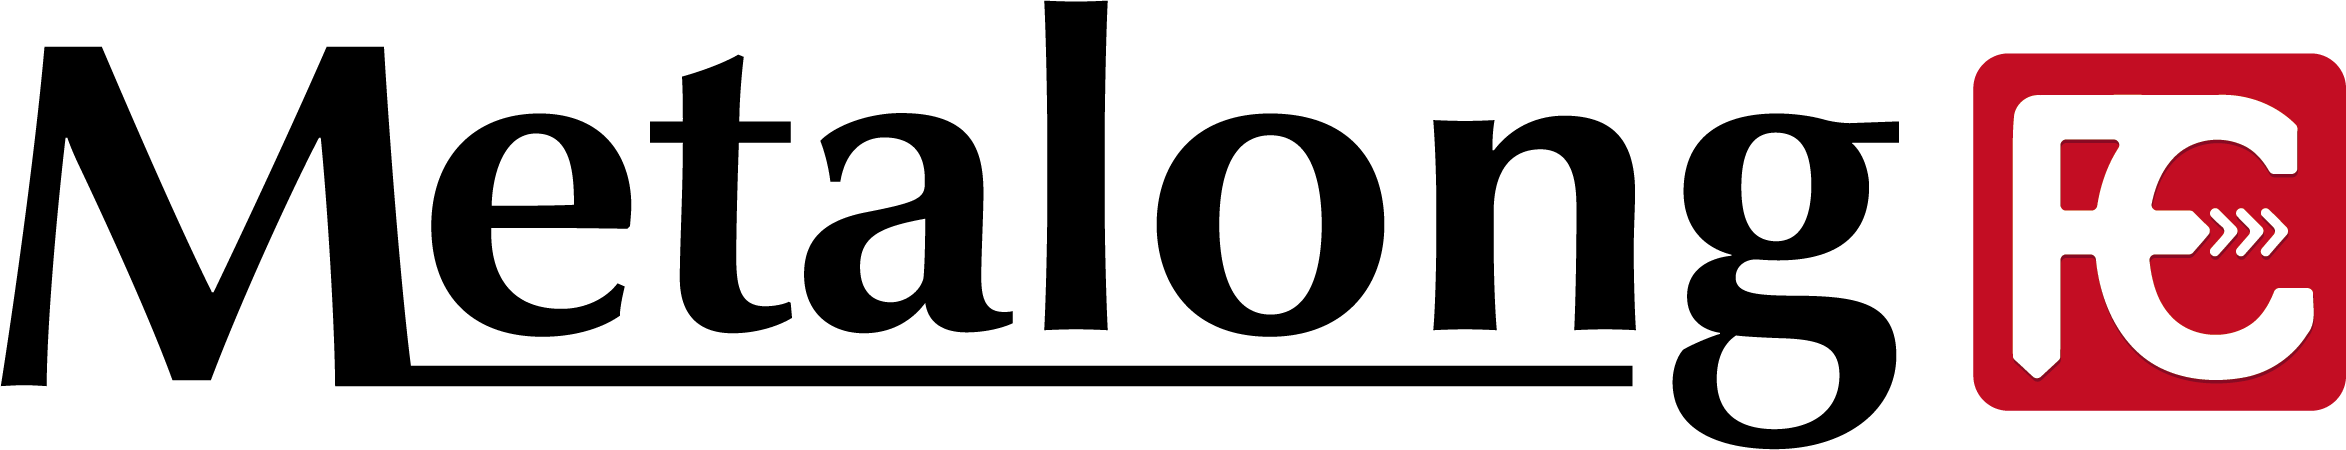 metalong-logo-header